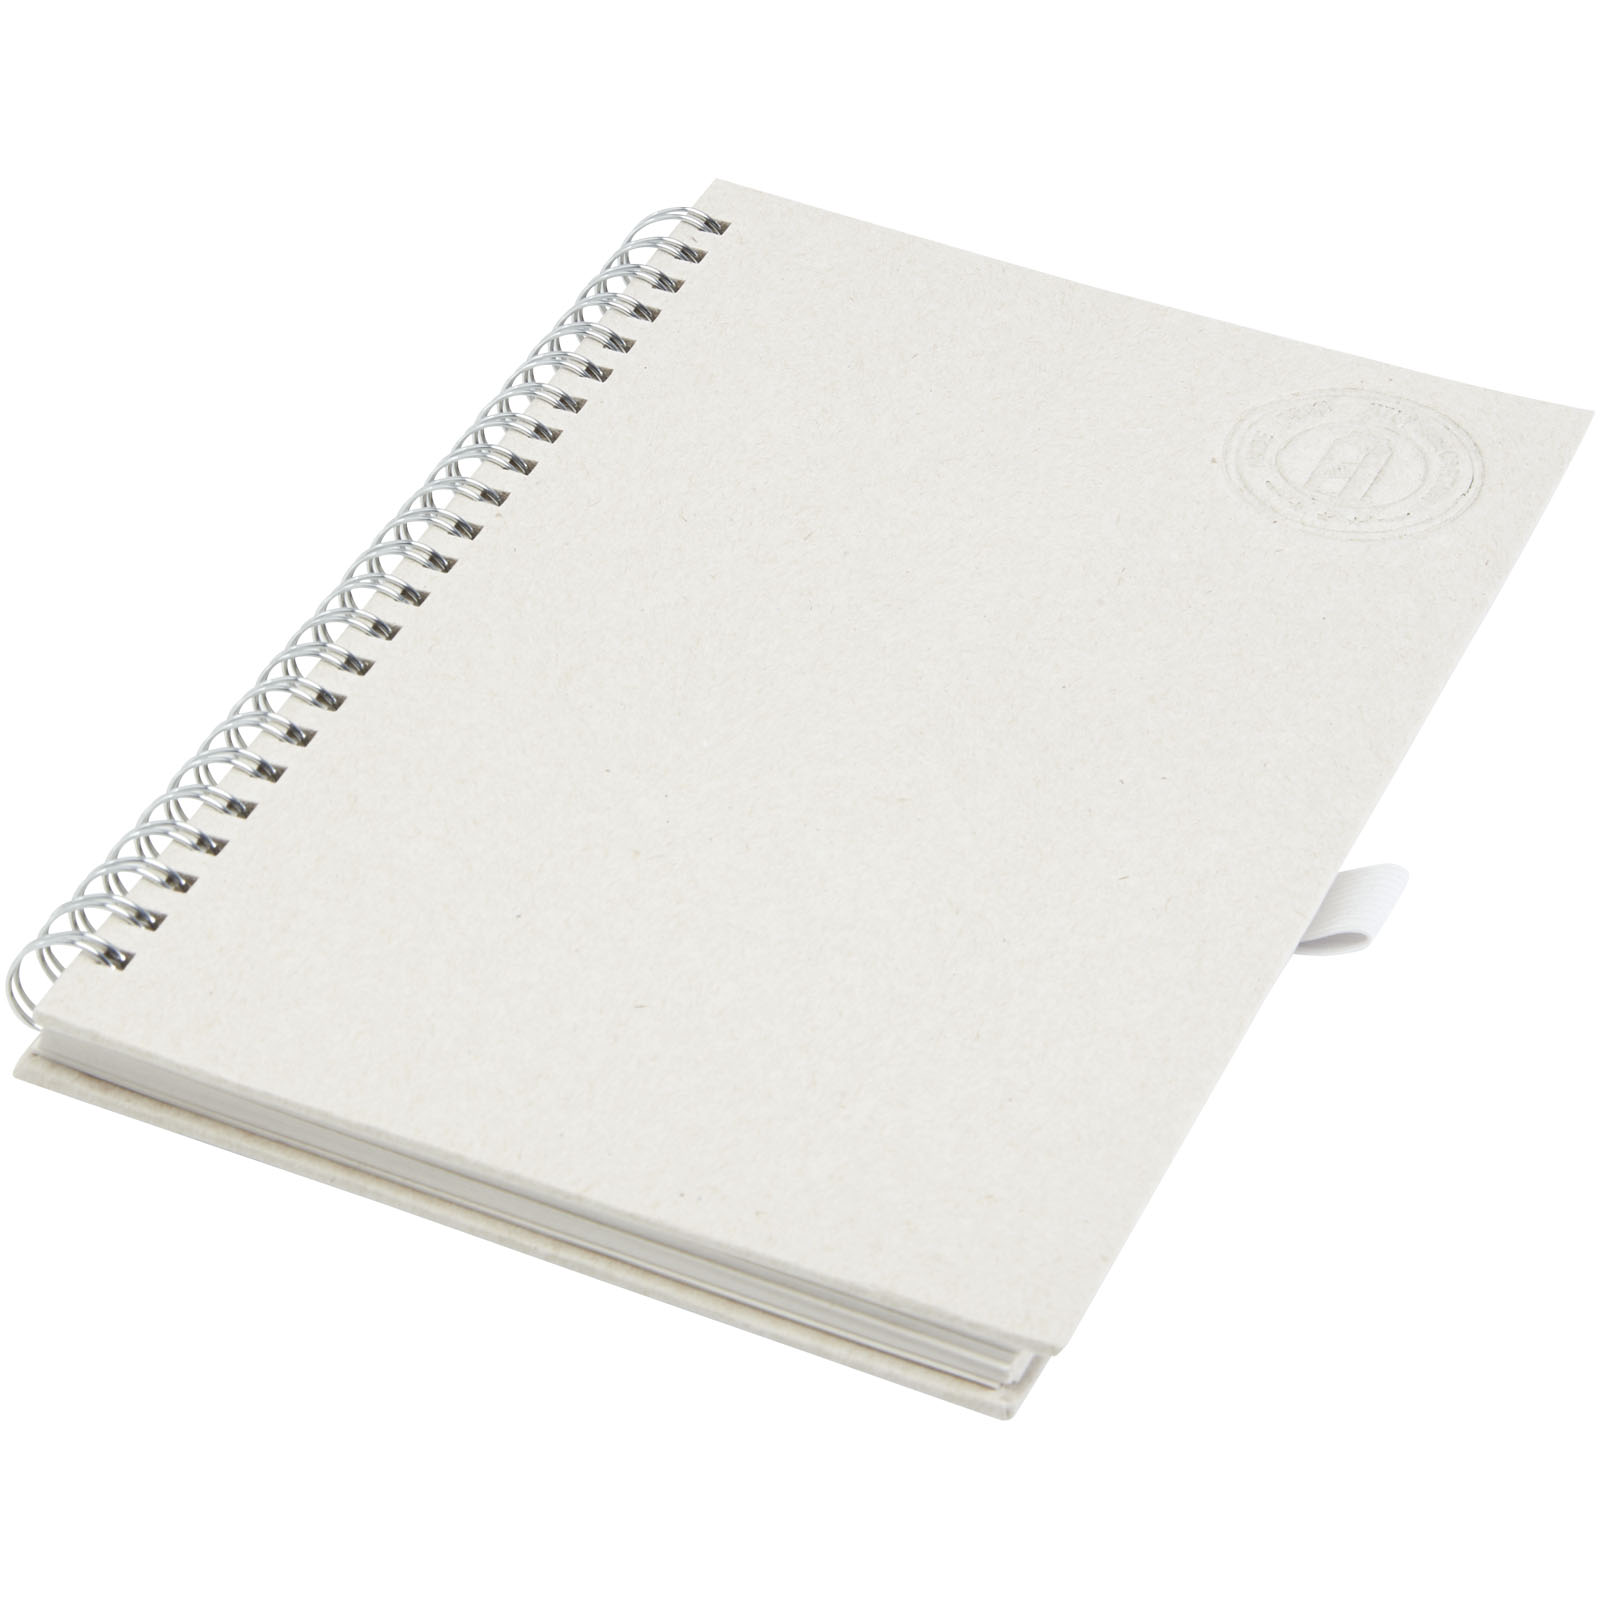 EcoSpiral Notebook - Chorley